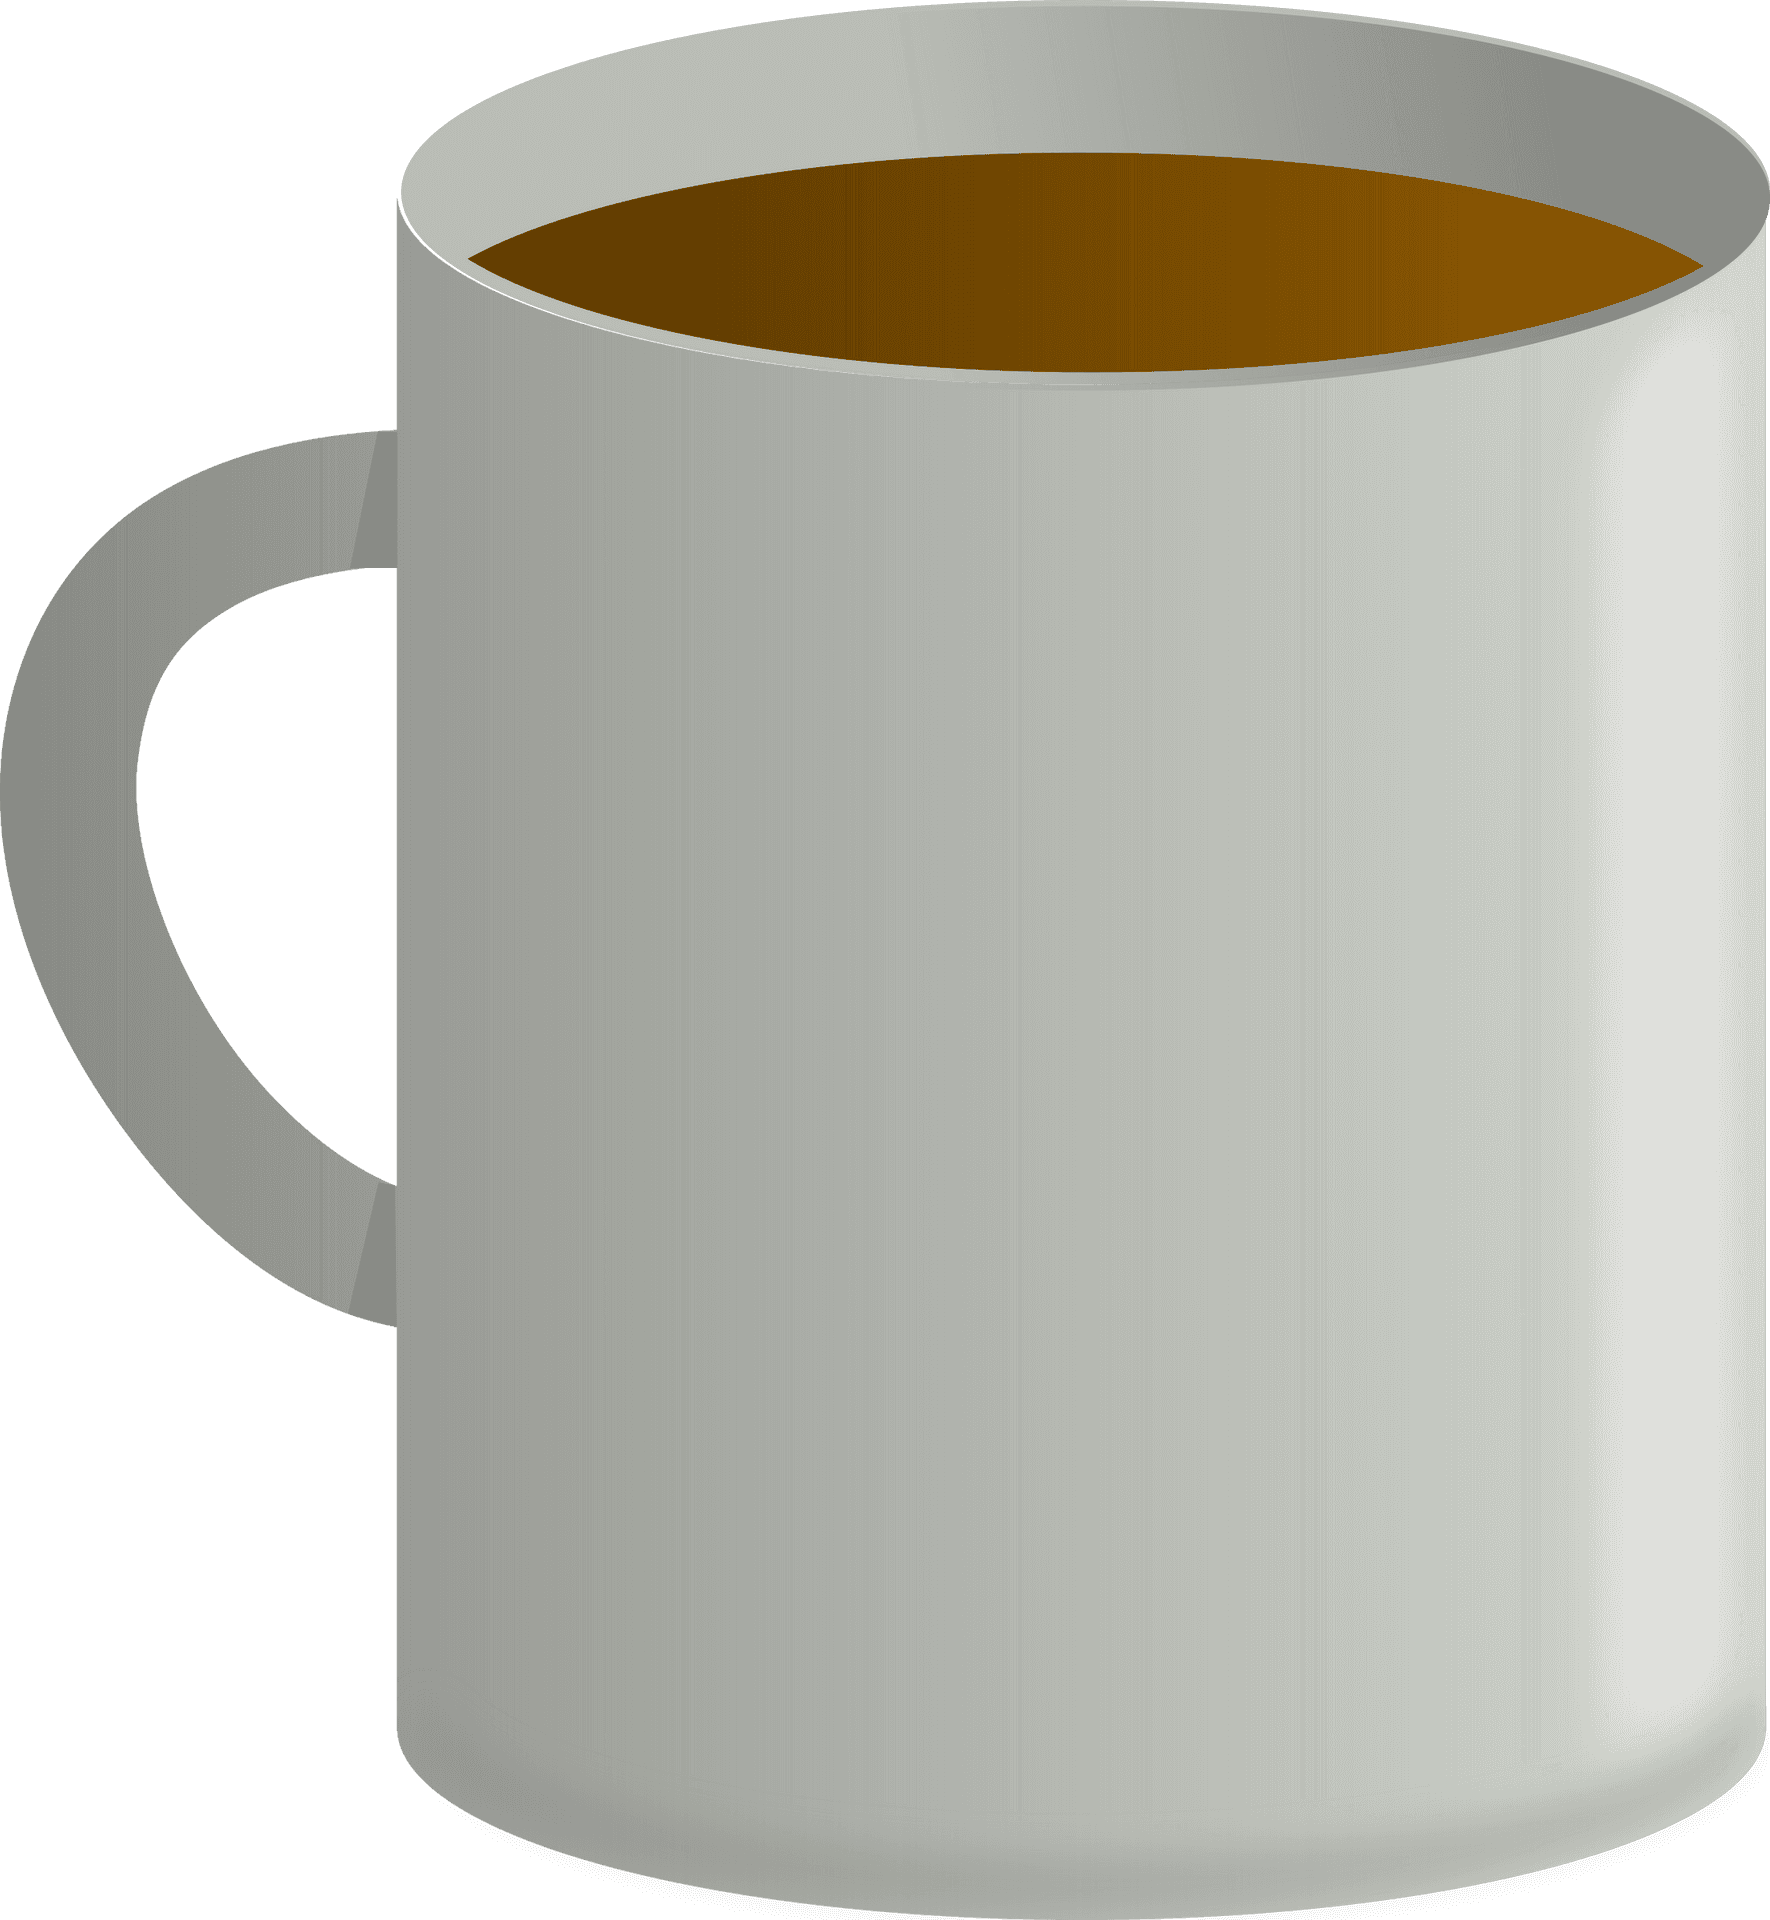 Coffee Mug Full Clipart.png PNG